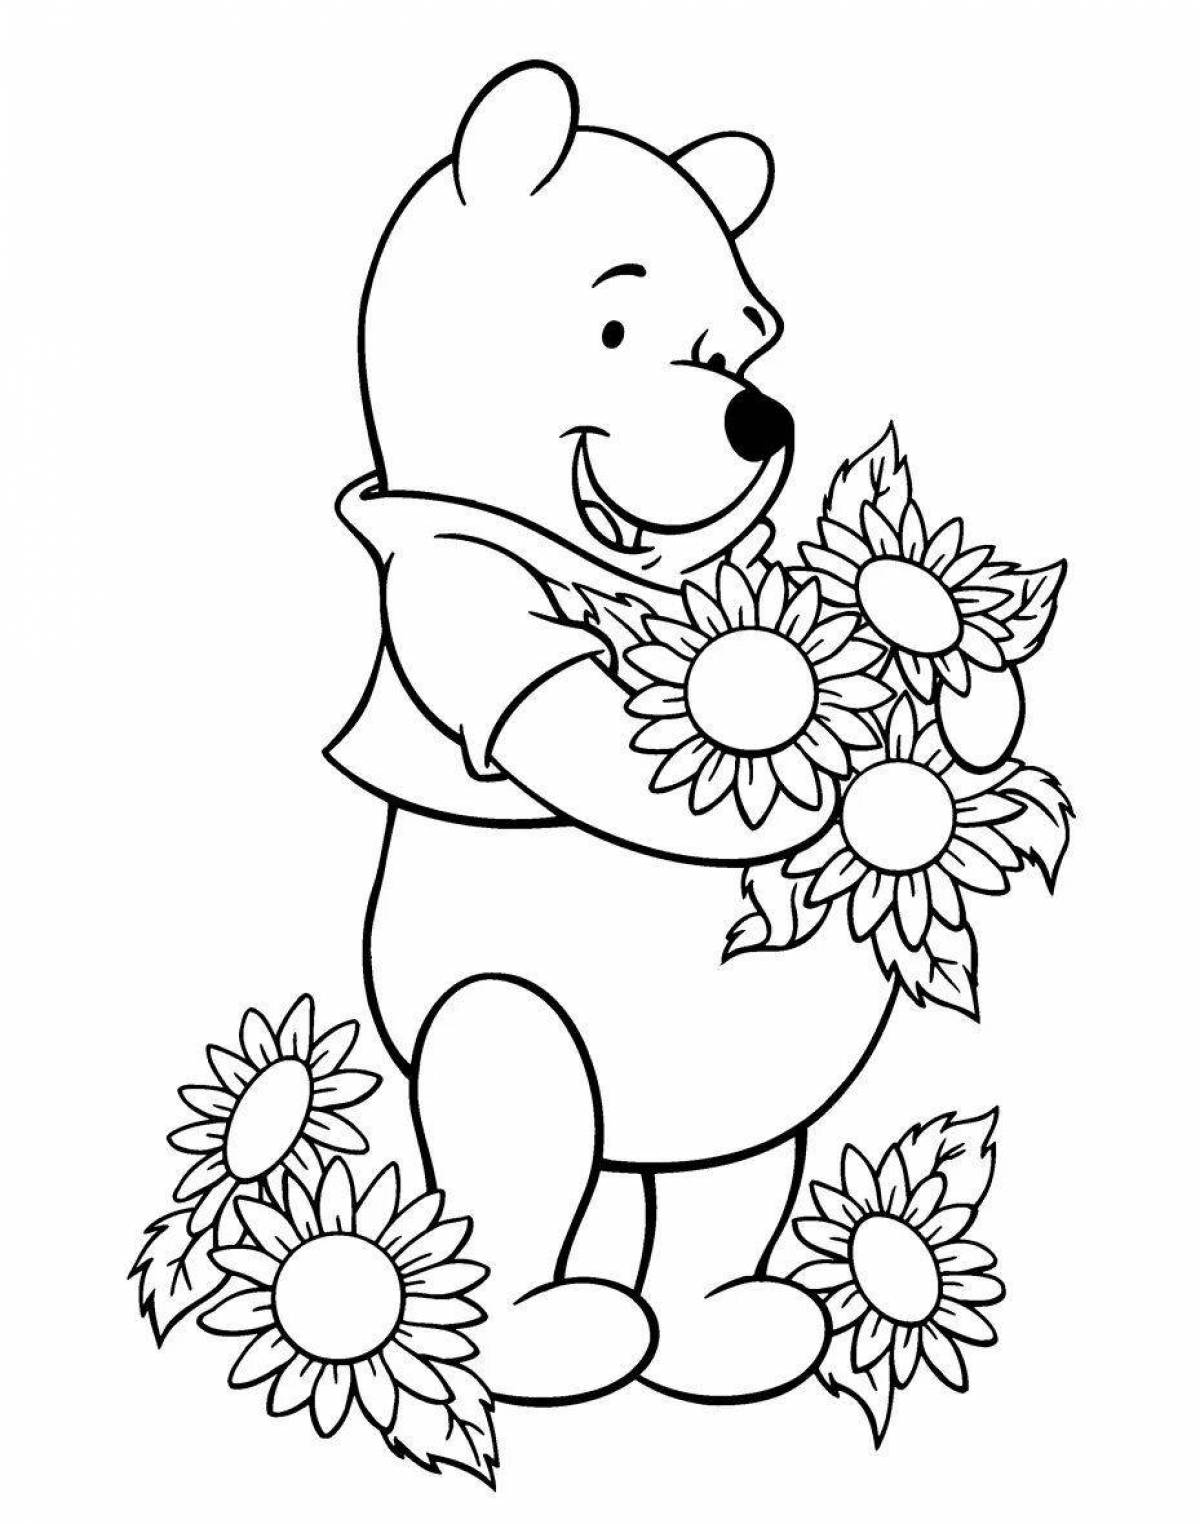 Adorable teddy bear with flowers